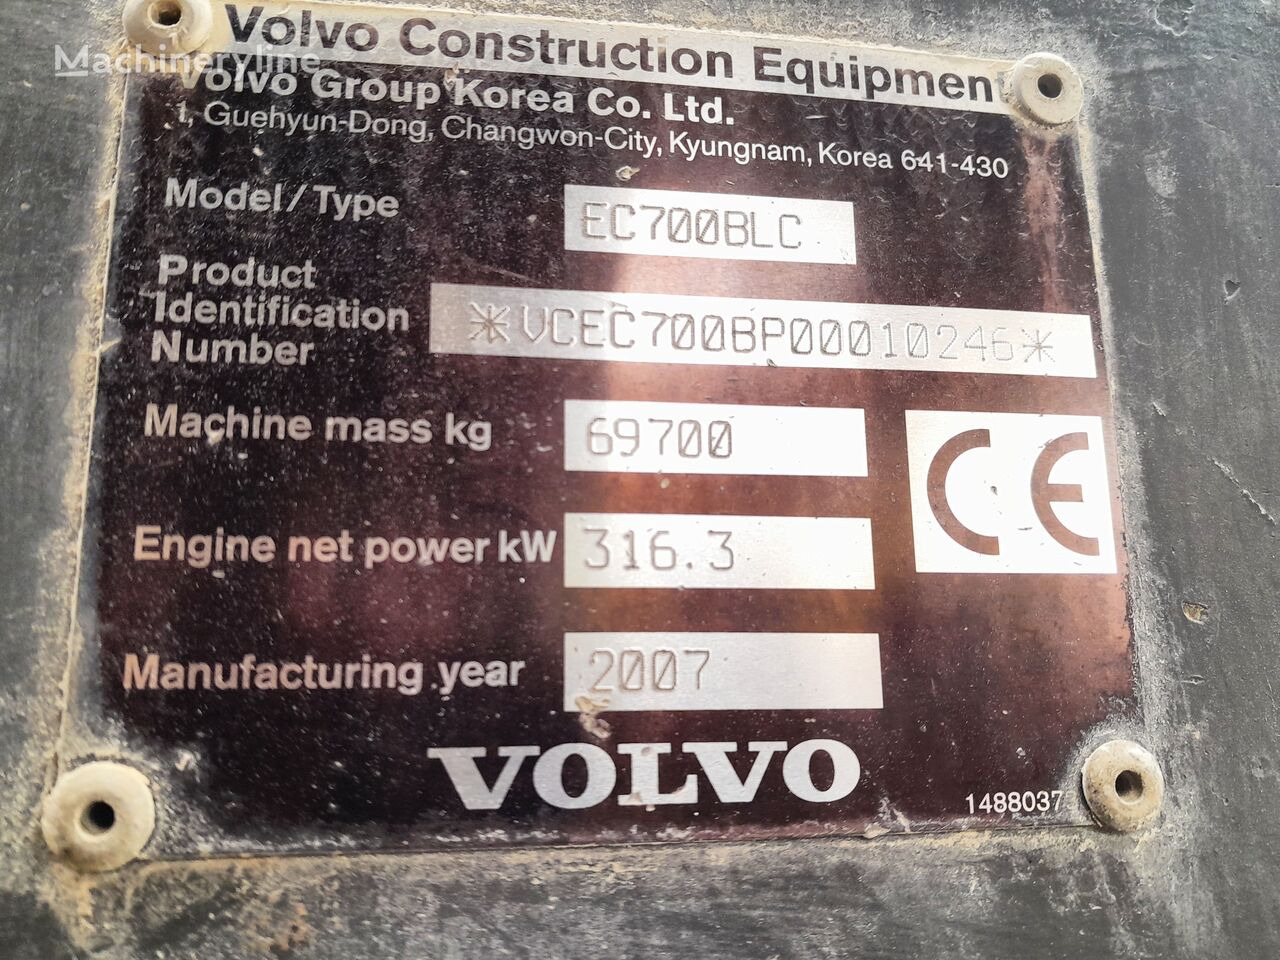 Telakaivukone Volvo EC700BLC: kuva Telakaivukone Volvo EC700BLC